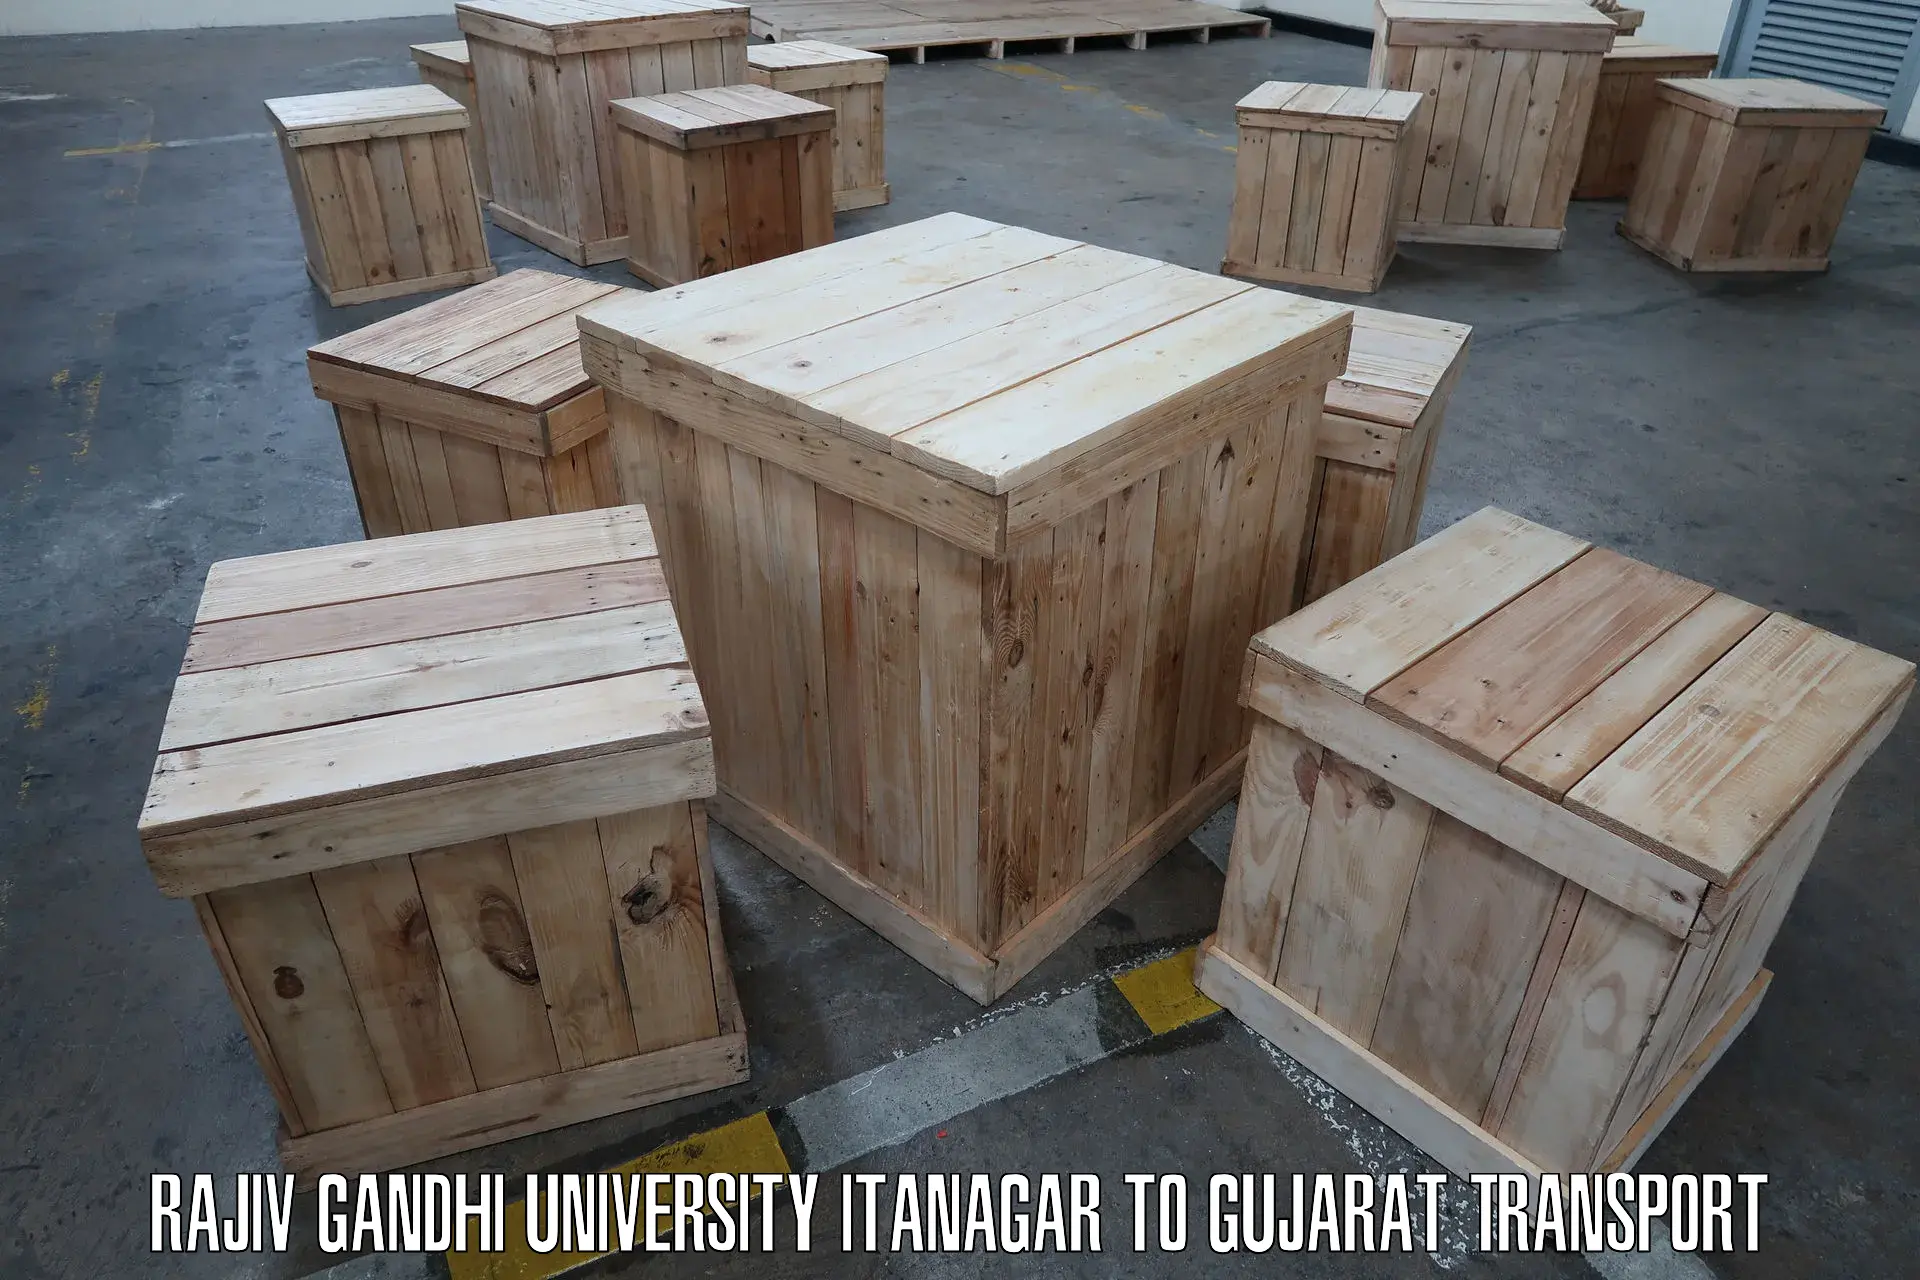 Transport in sharing Rajiv Gandhi University Itanagar to Jamnagar